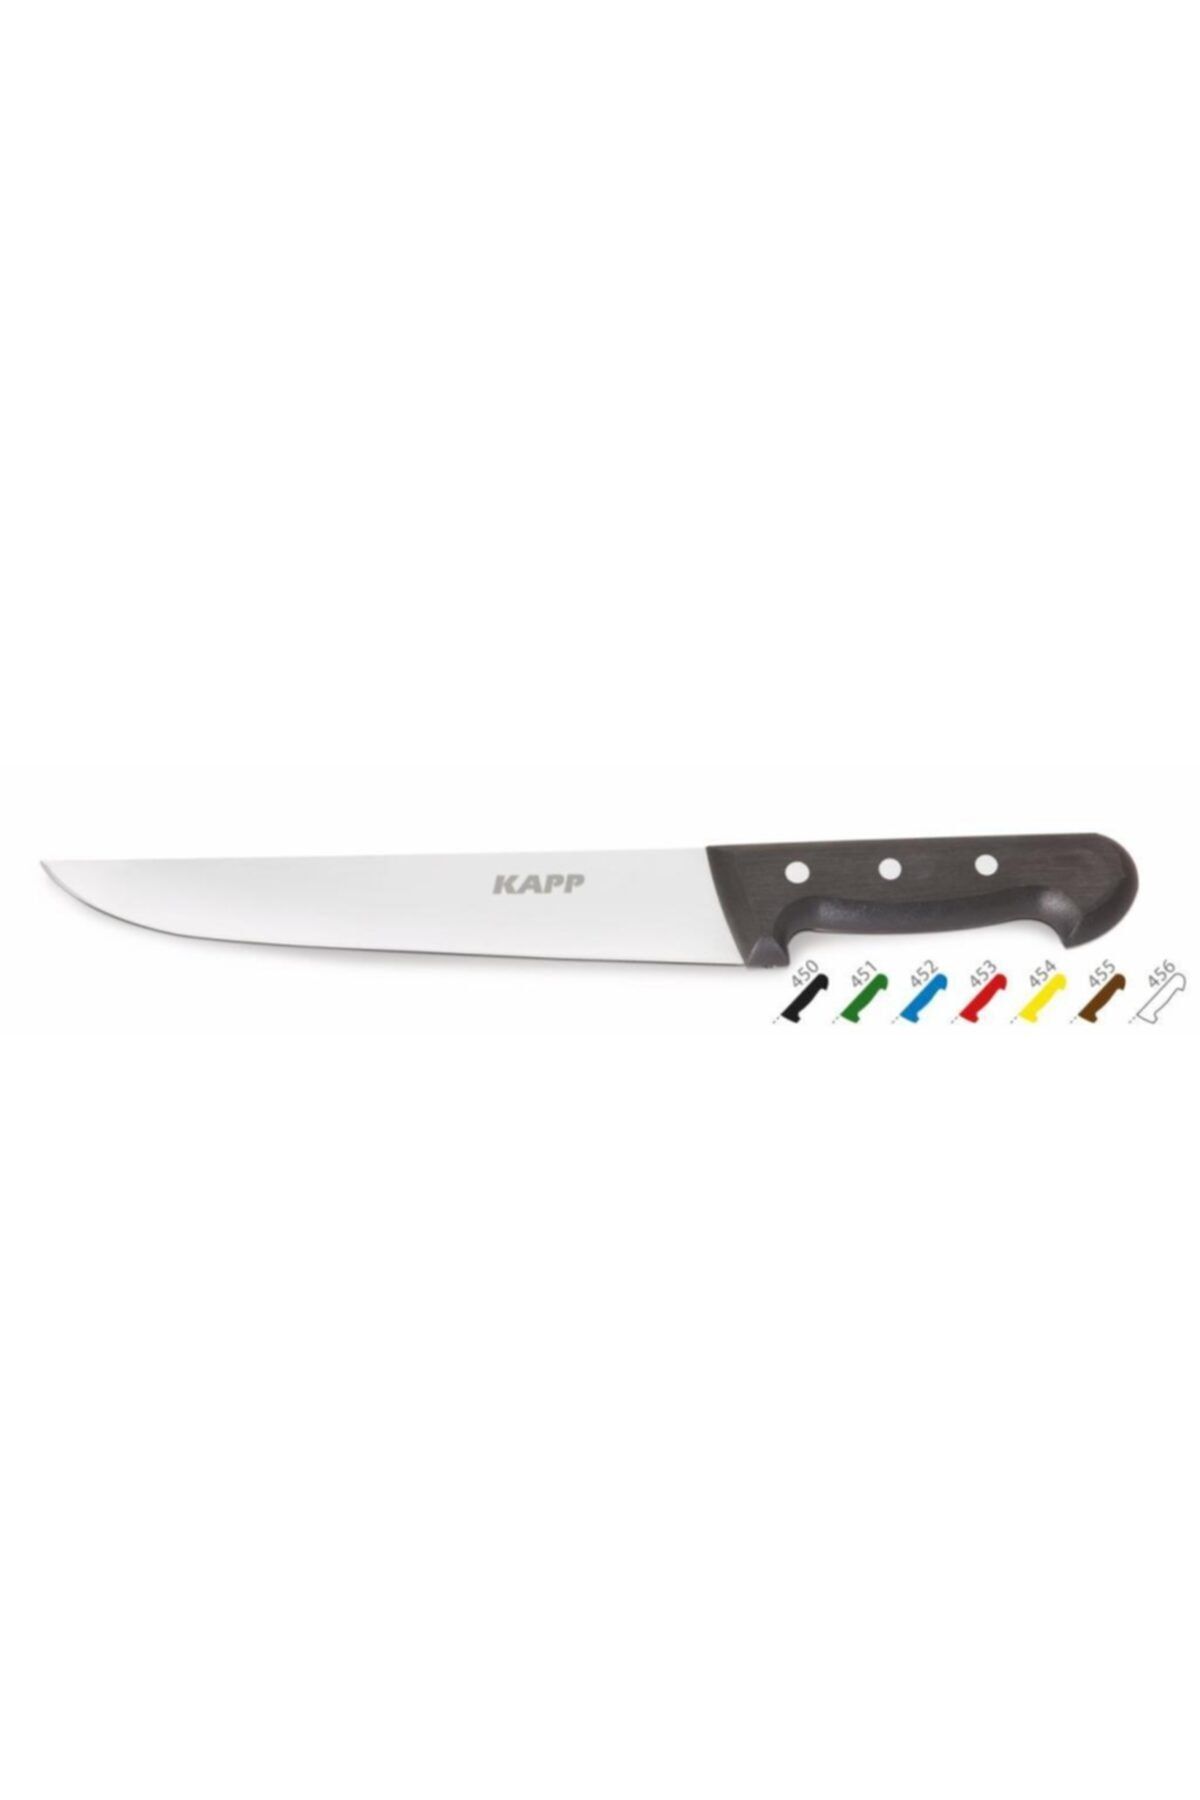 Kapp Mutfak Bıçağı - Siyah 19 Cm